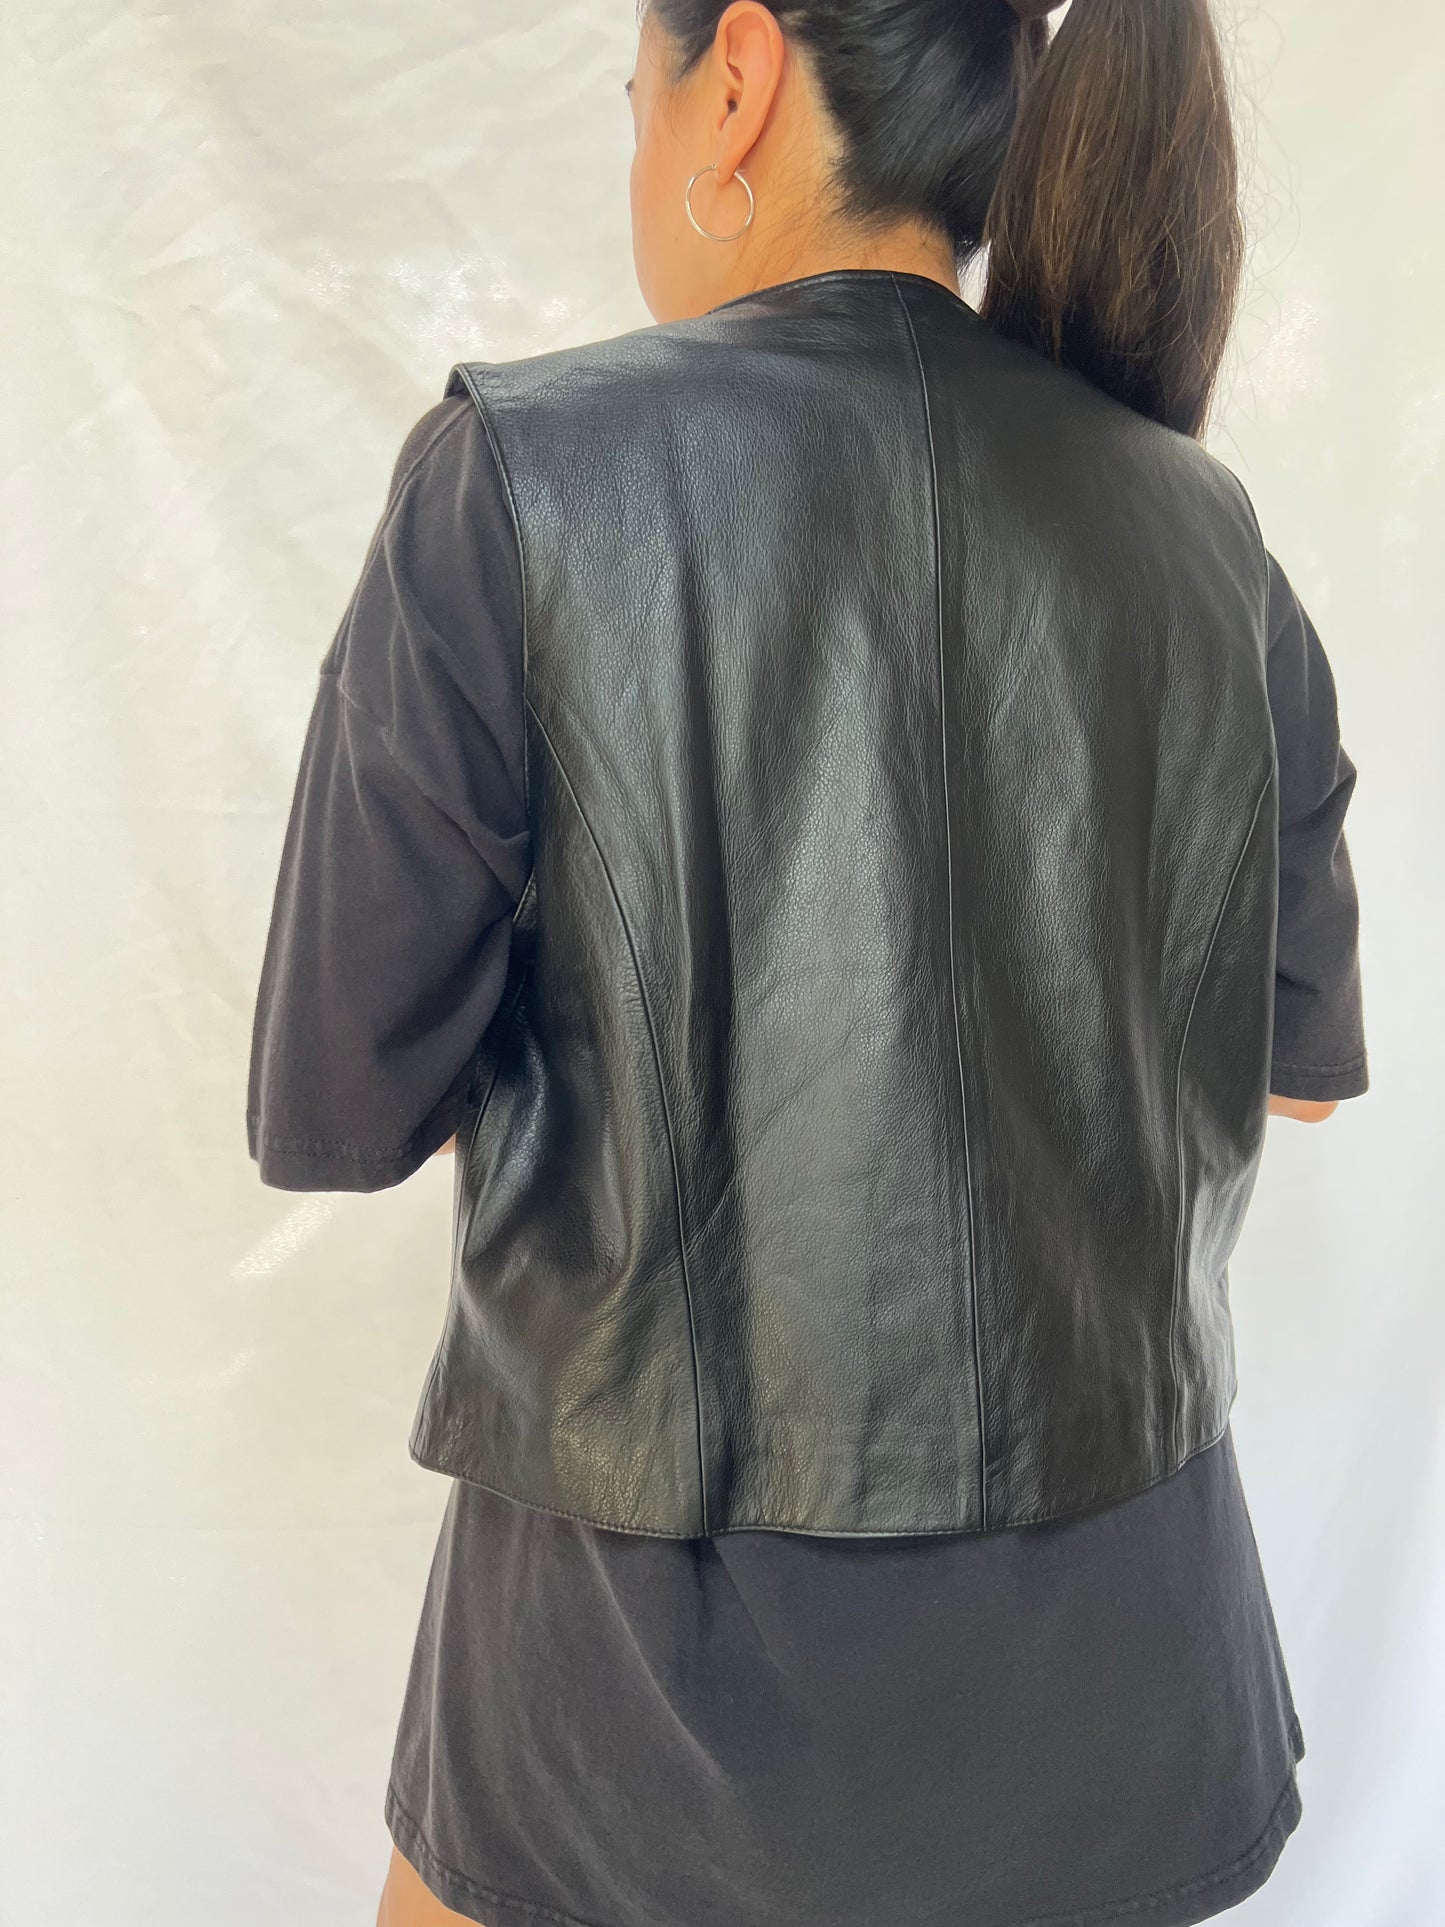 Wilsons Leather Vest - XL